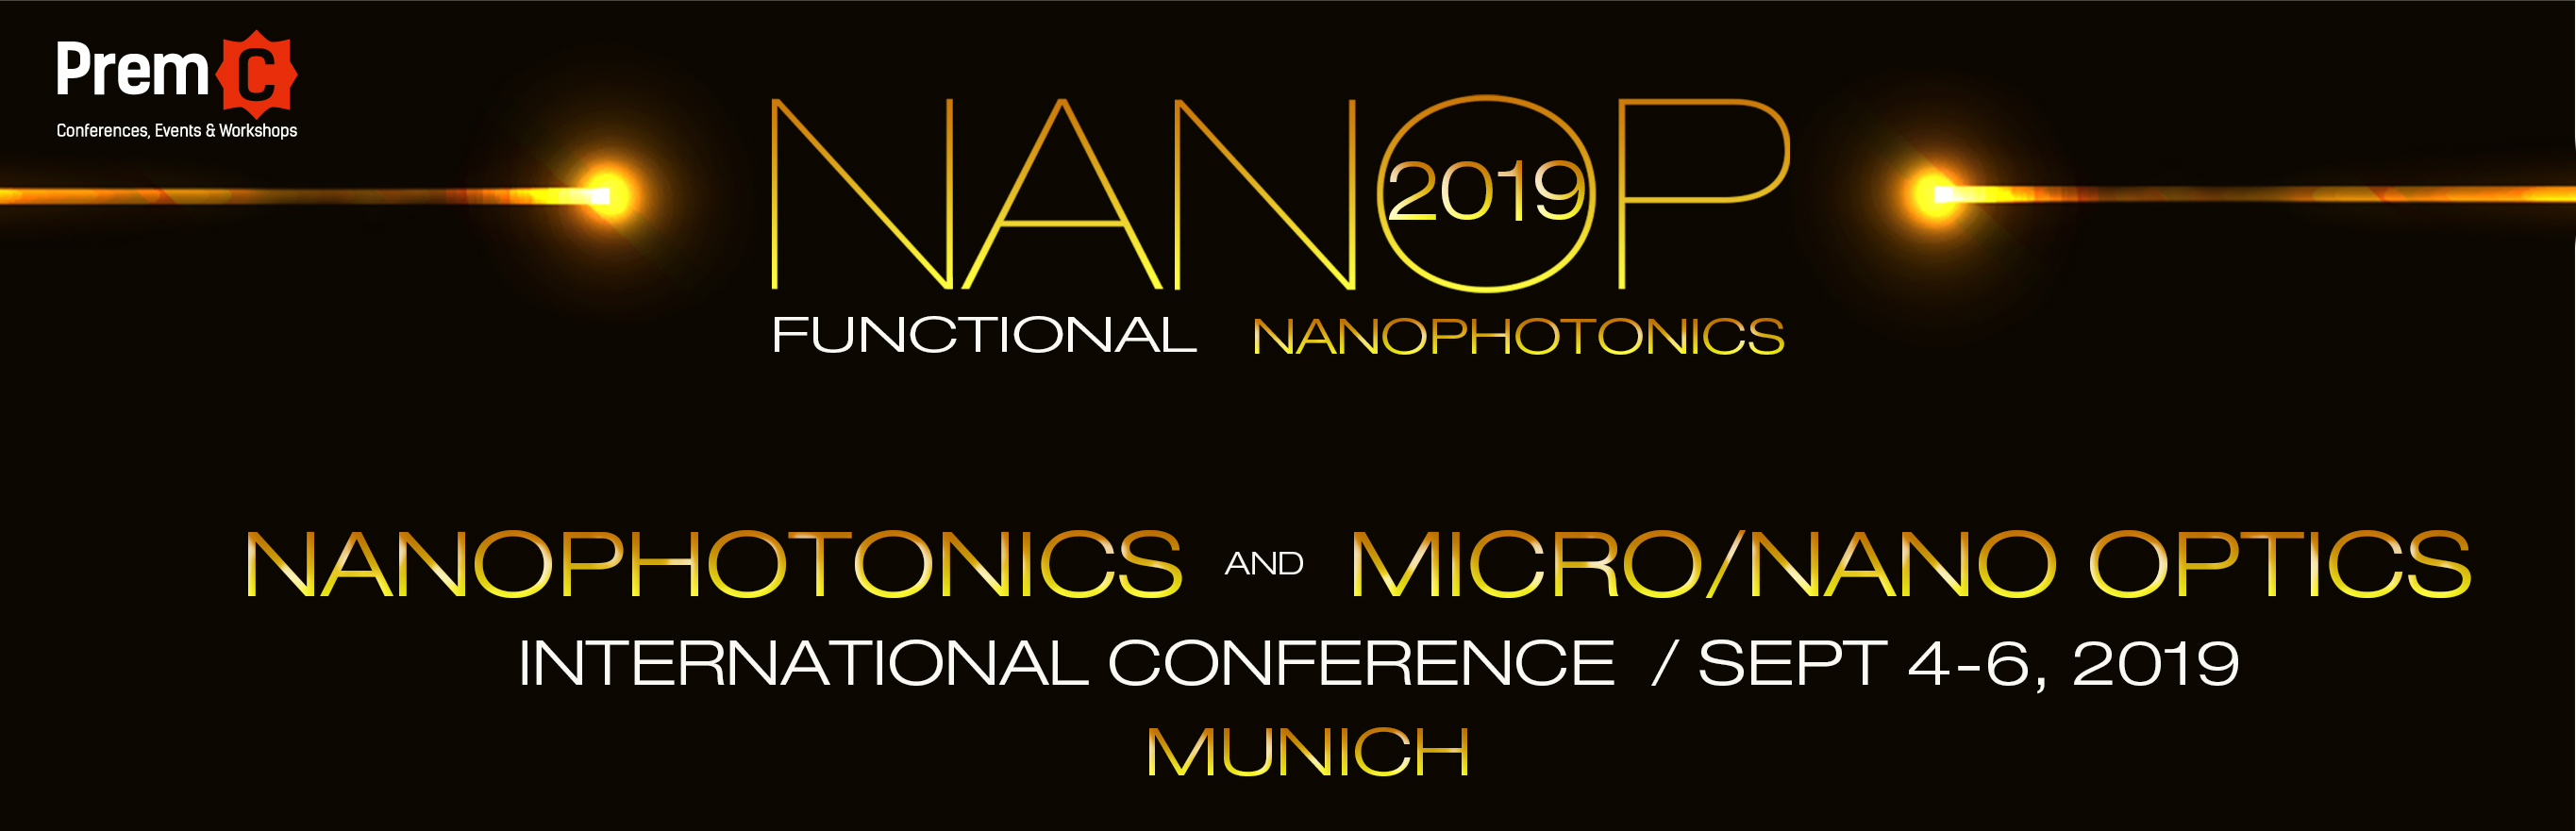 Nanophotonics and Micro/Nano Optics International Conference 2019